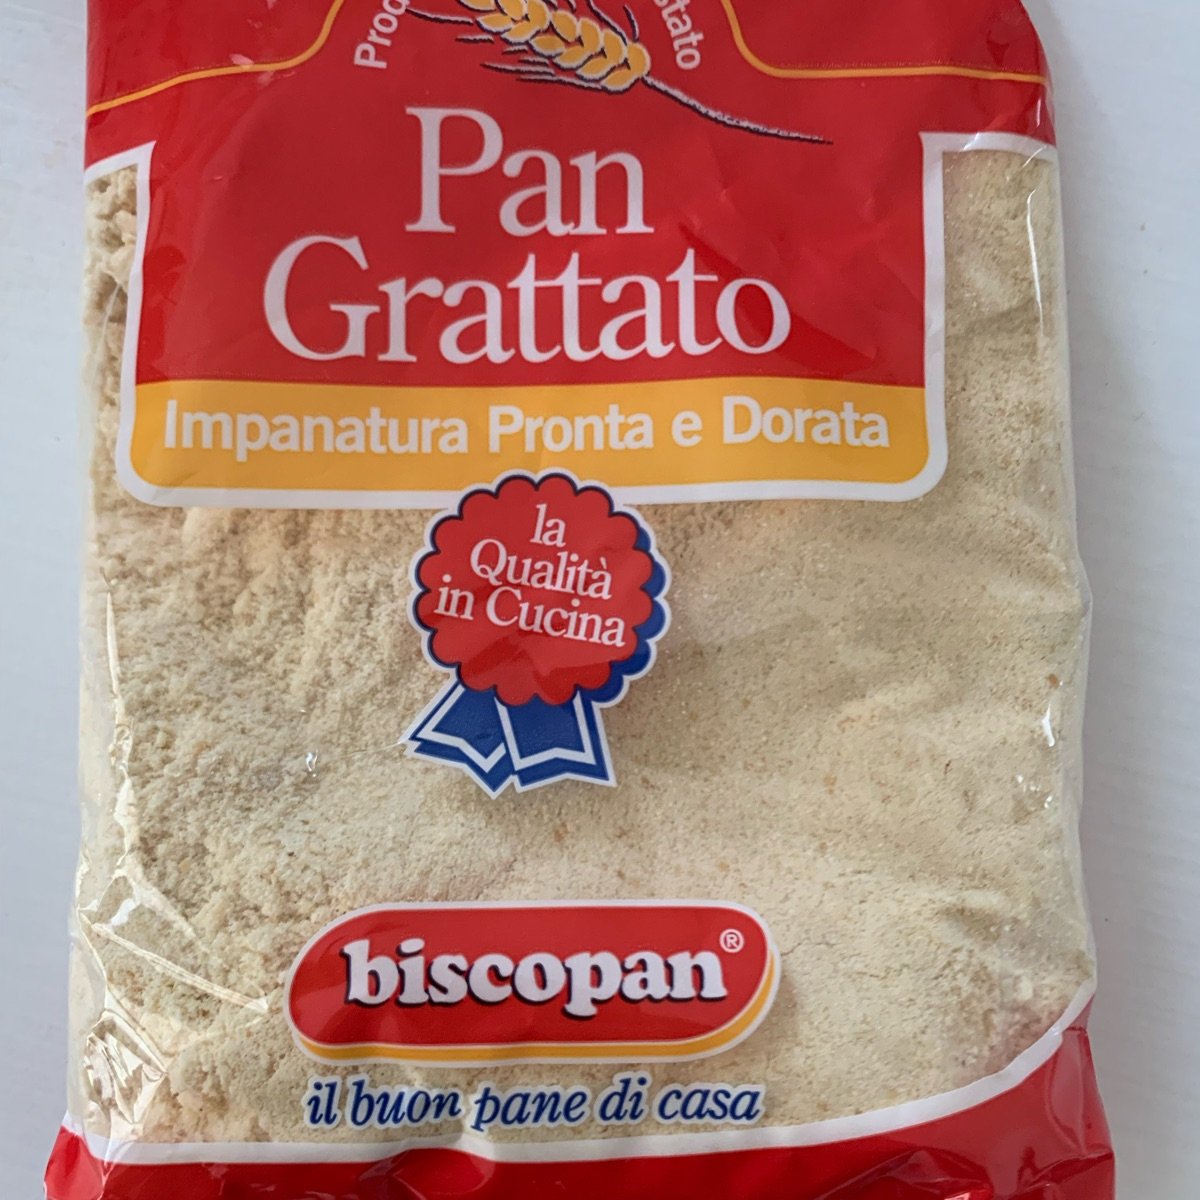 Biscopan Pan grattato Reviews